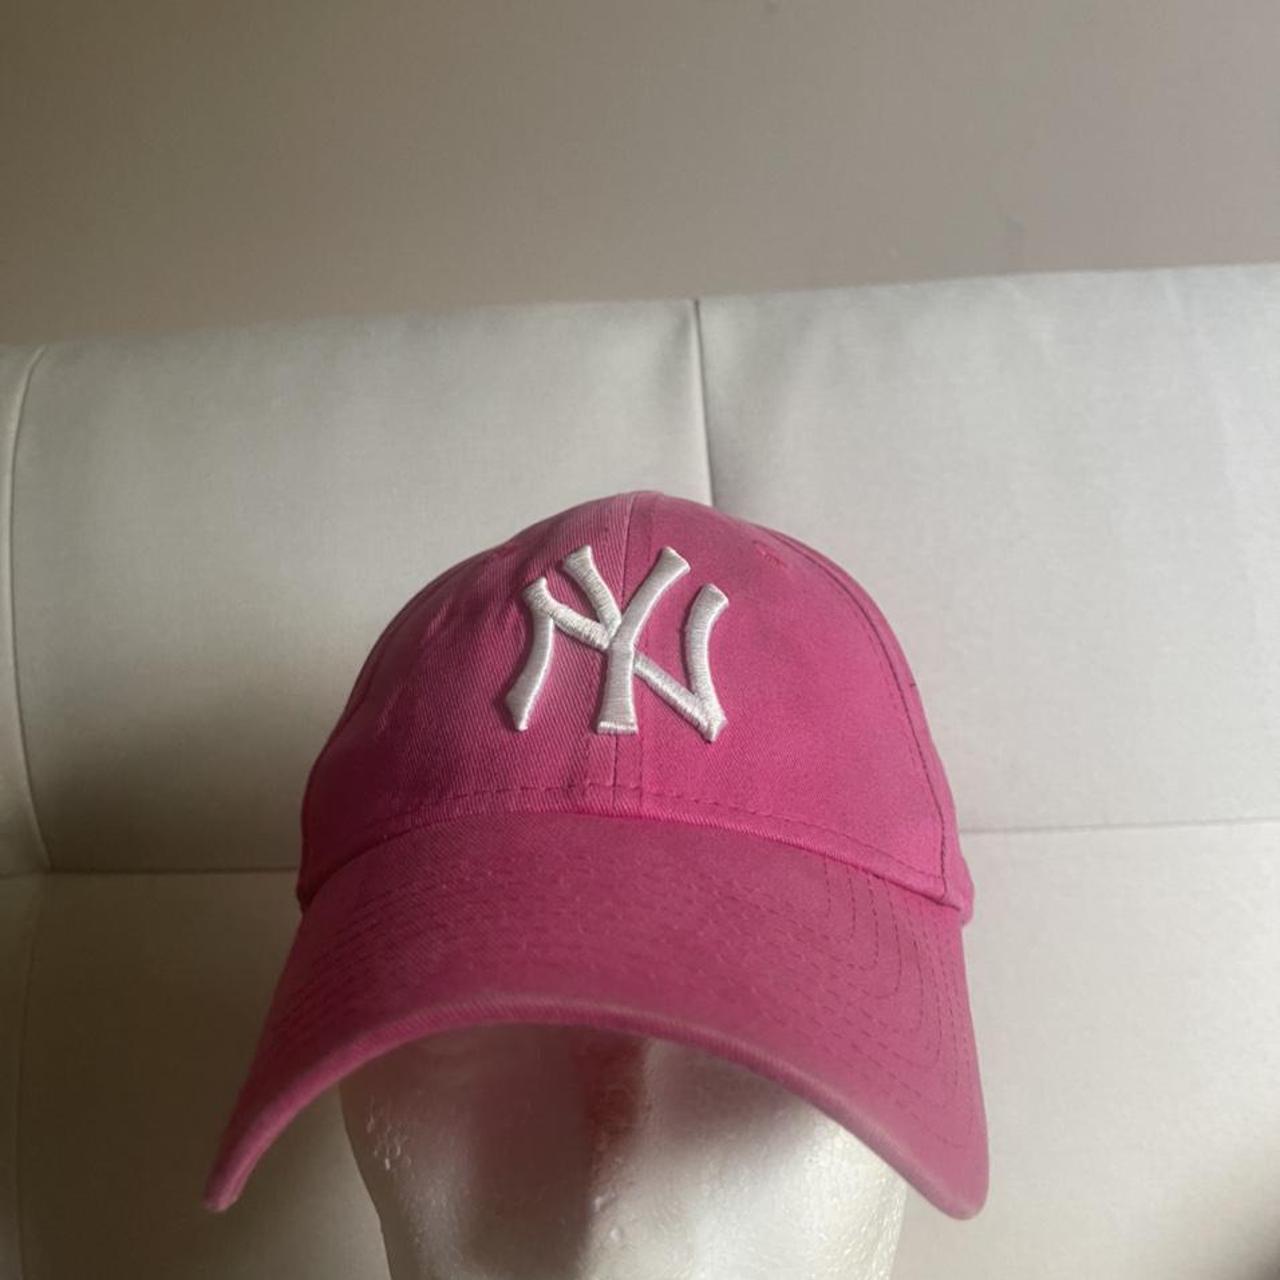 New Era Men's Black and Pink Hat (2)